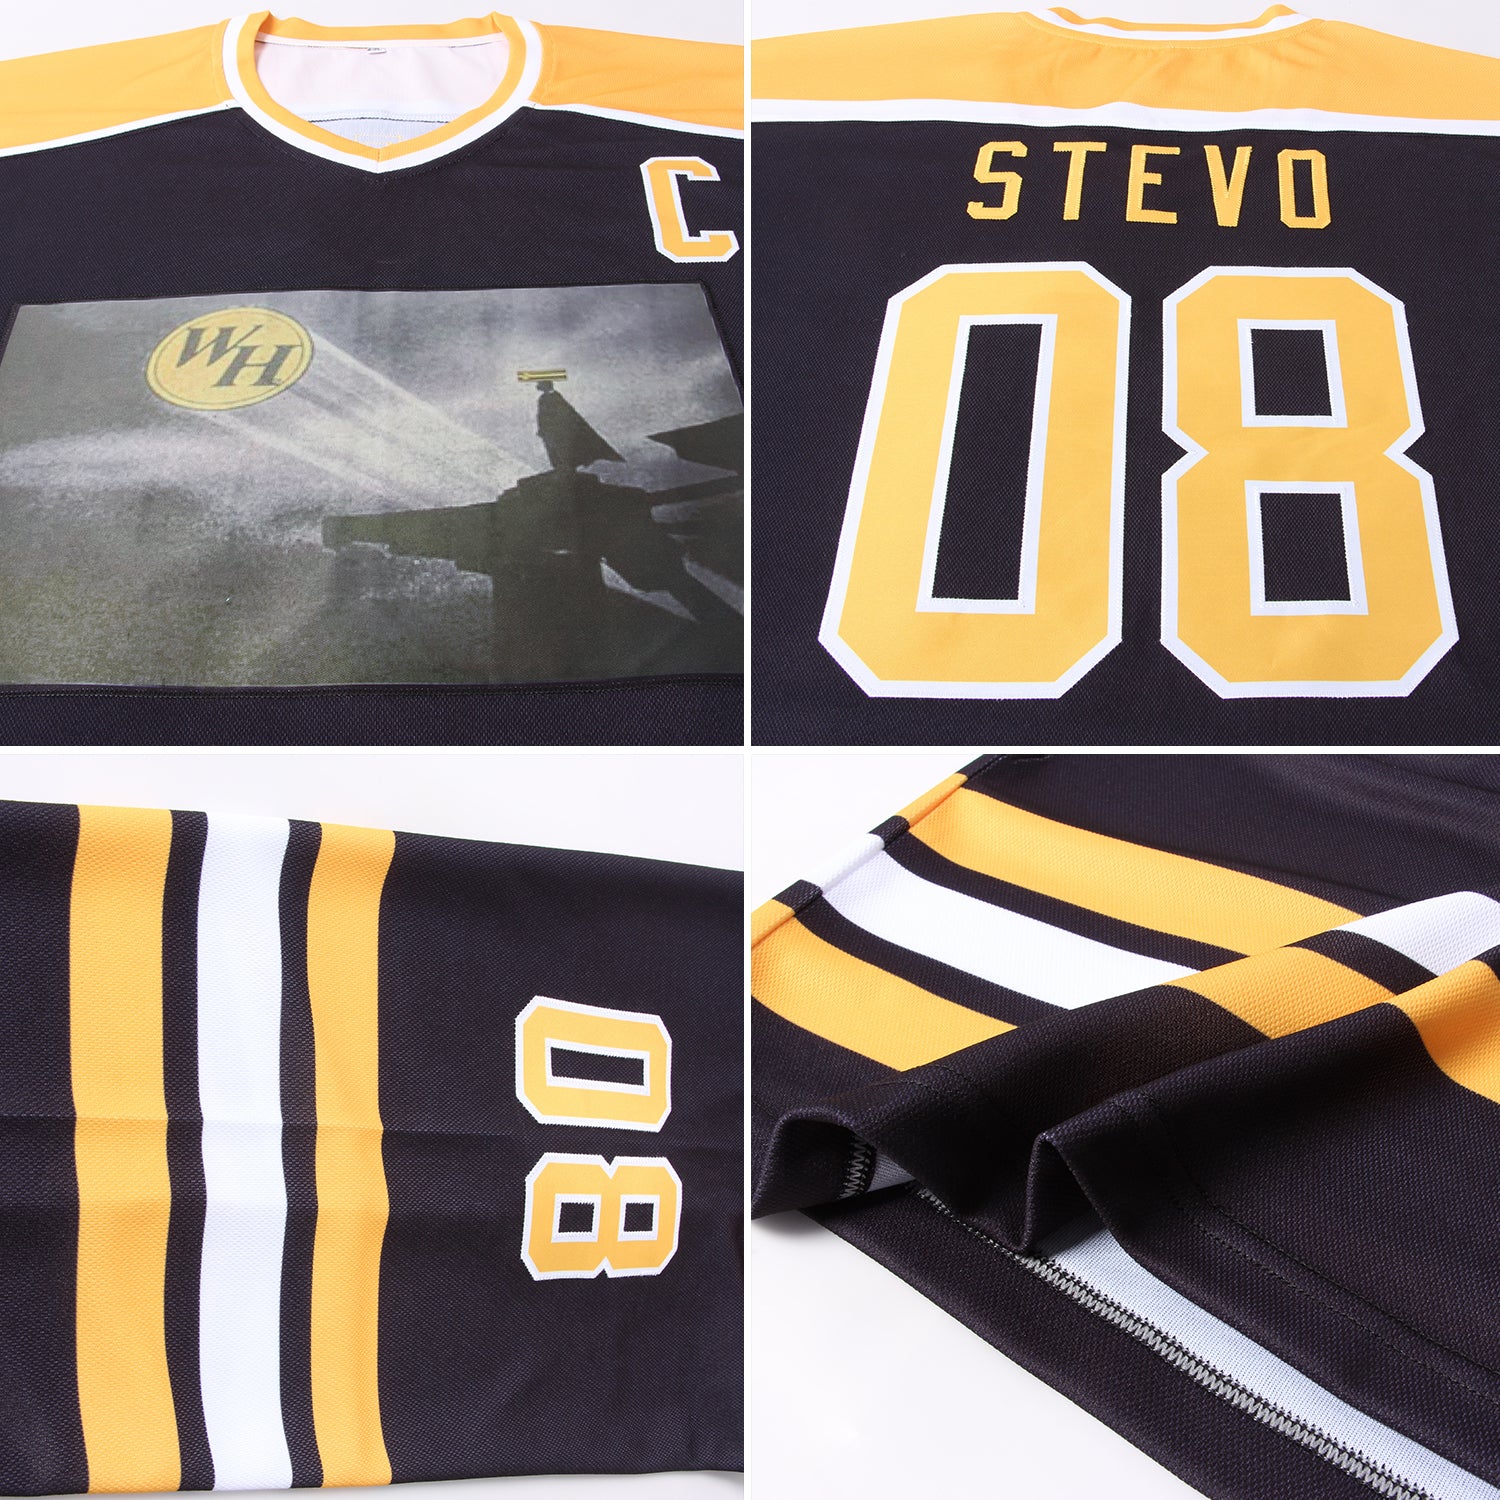 Cheap Custom Gray Black-Old Gold Hockey Jersey Free Shipping –  CustomJerseysPro